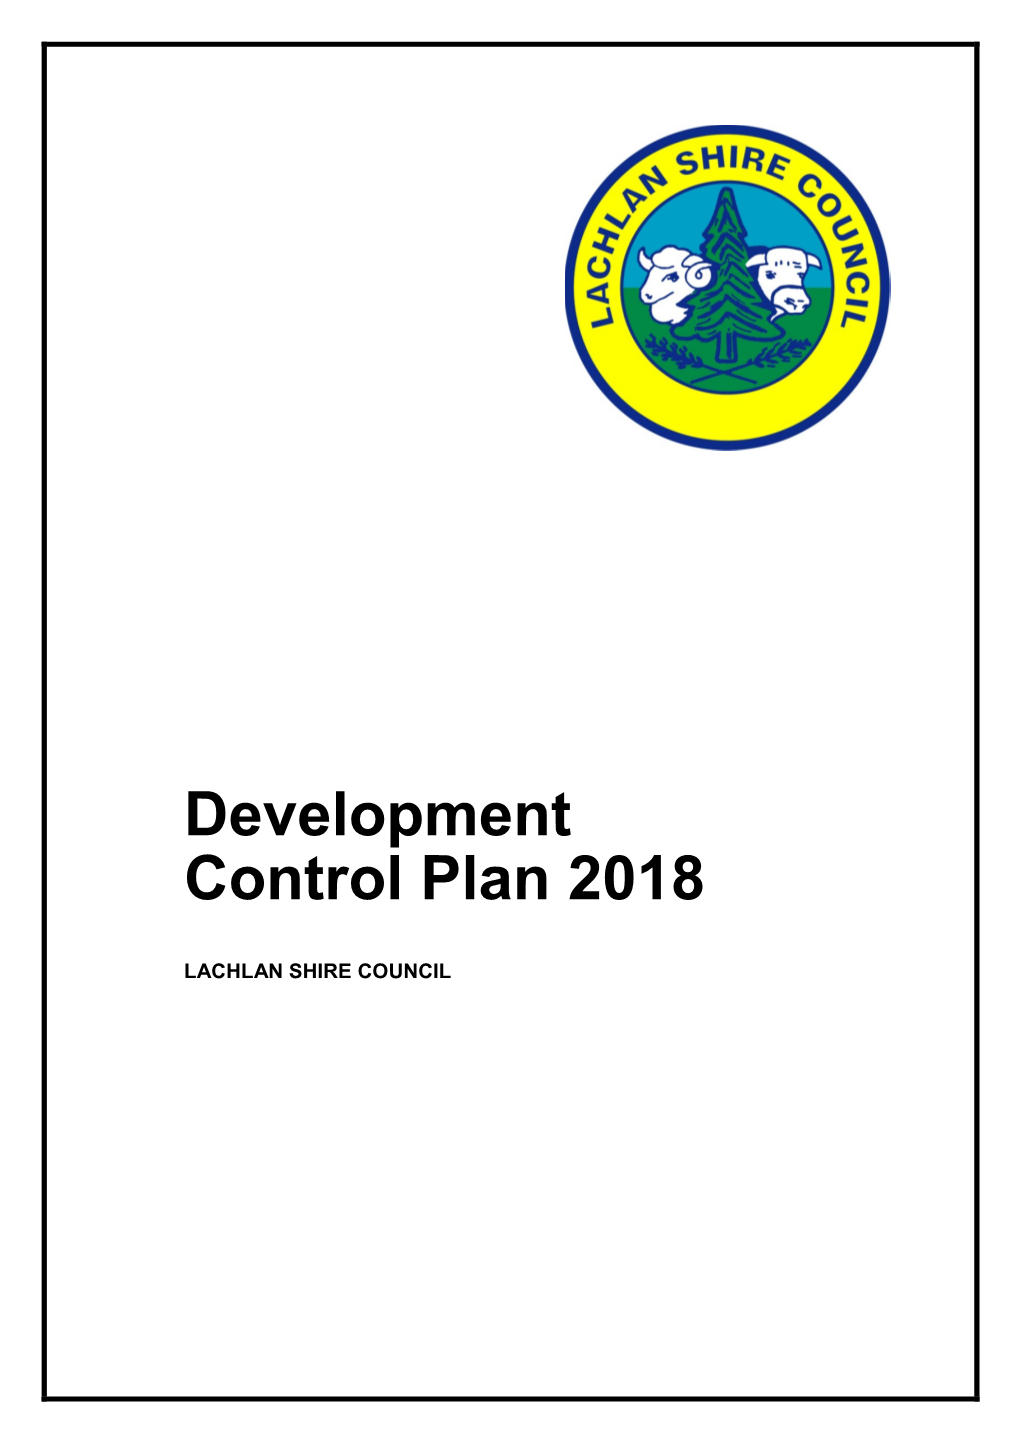 Development Control Plan 2018